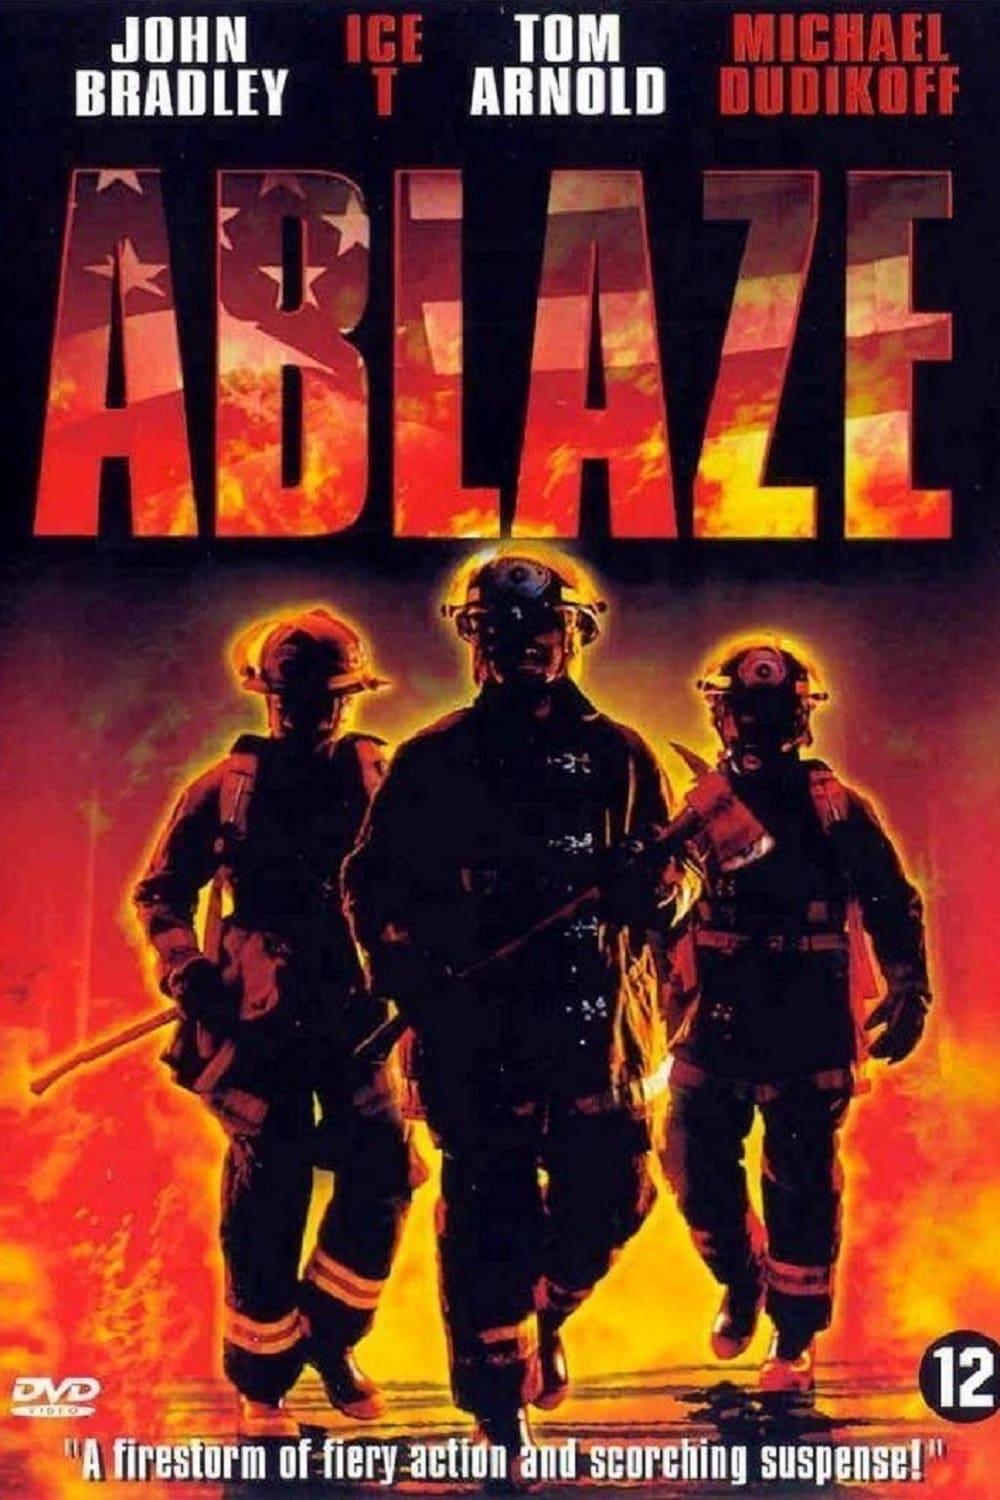 Ablaze poster